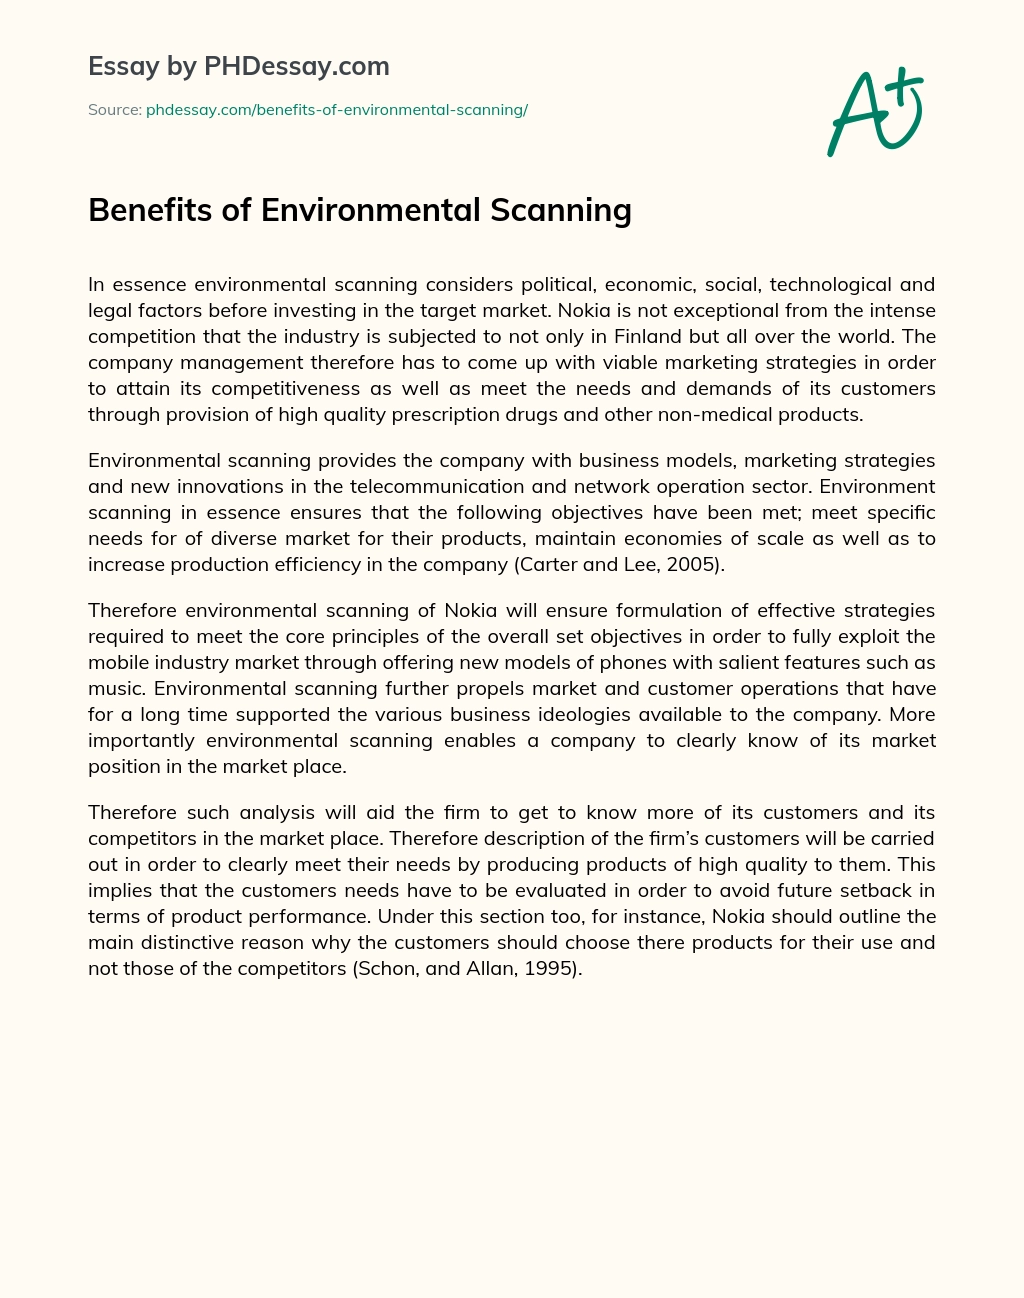 Benefits of Environmental Scanning essay